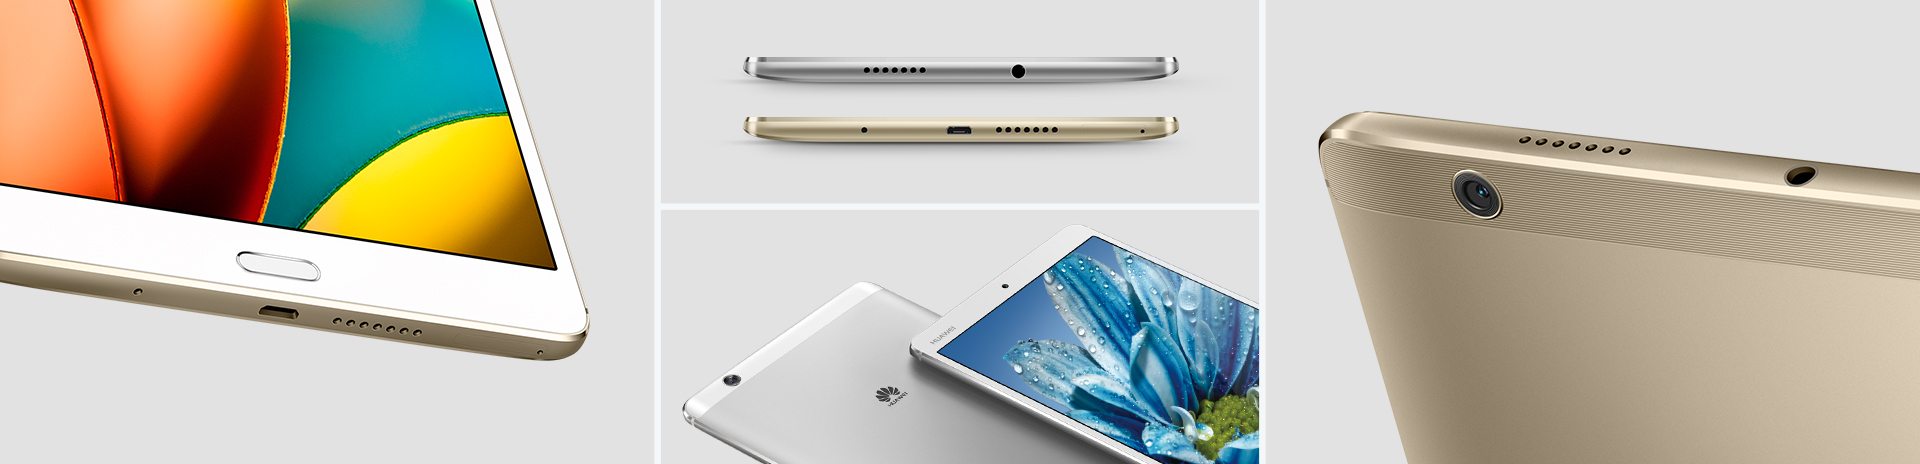 Huawei MediaPad M3 Test Review Tablet 1